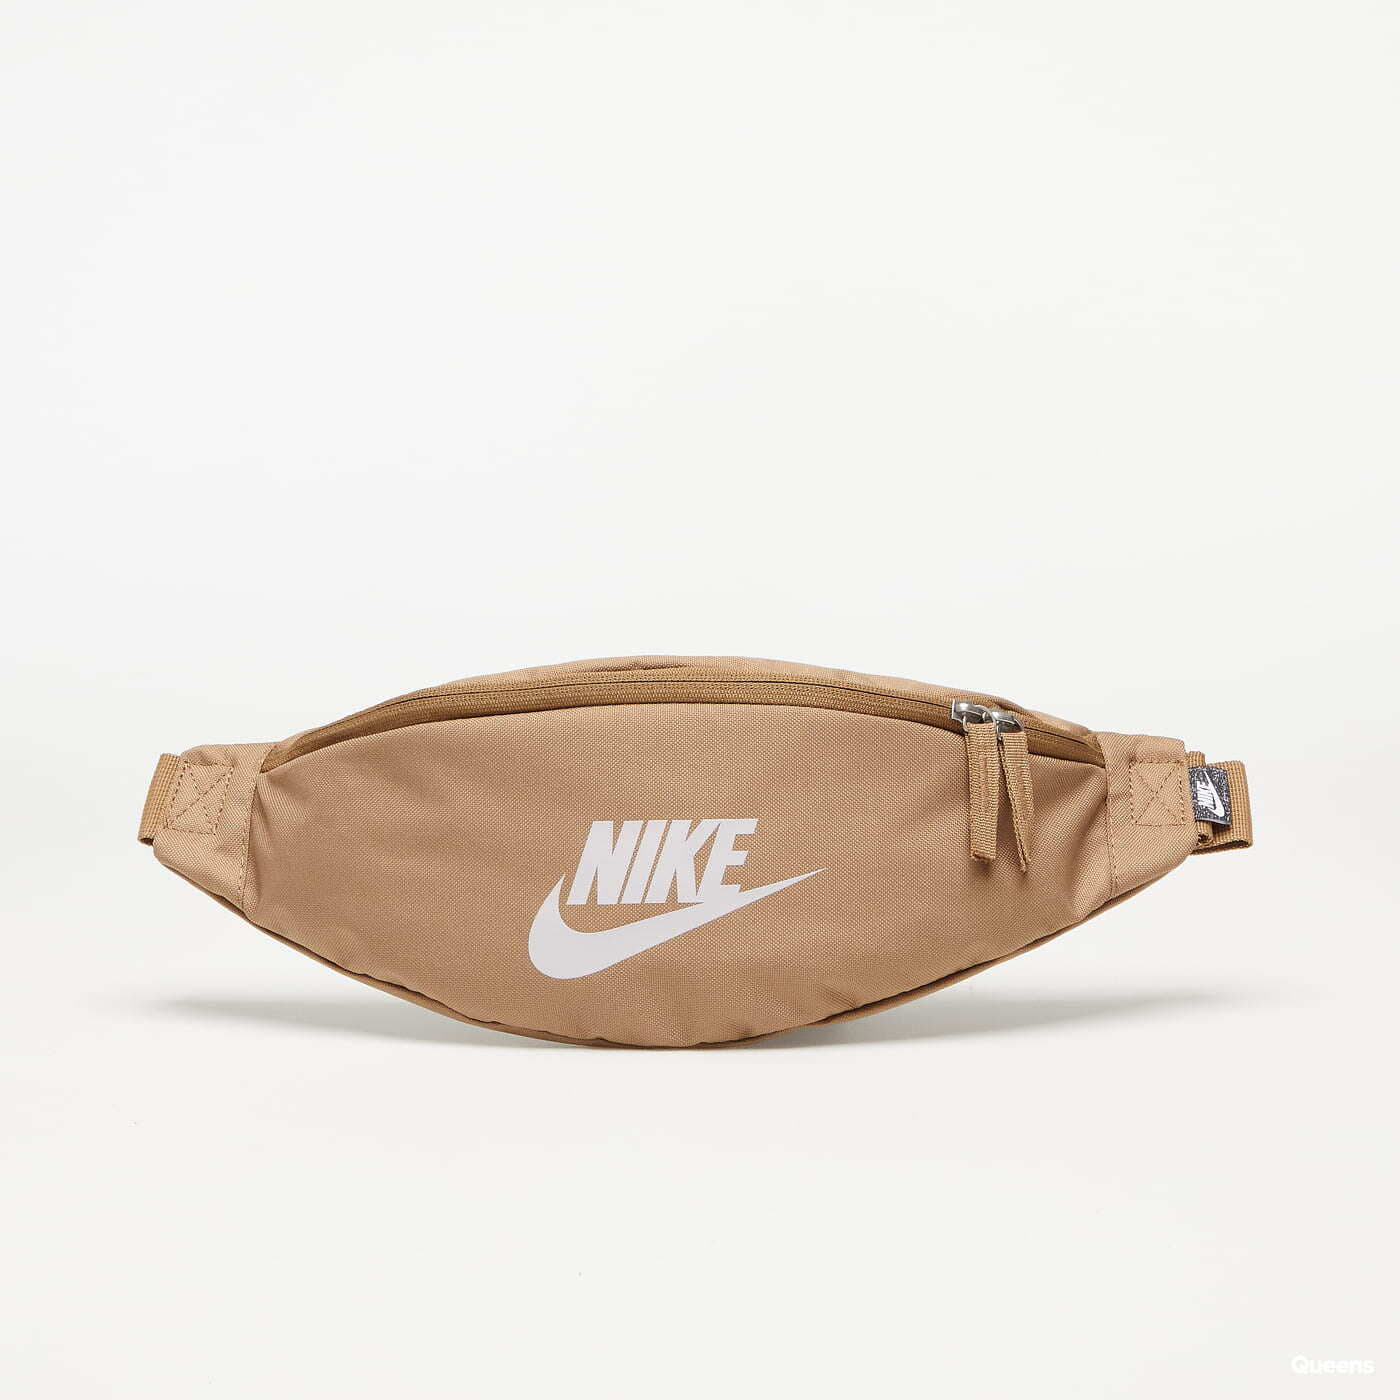 Nike Heritage fanny pack in brown